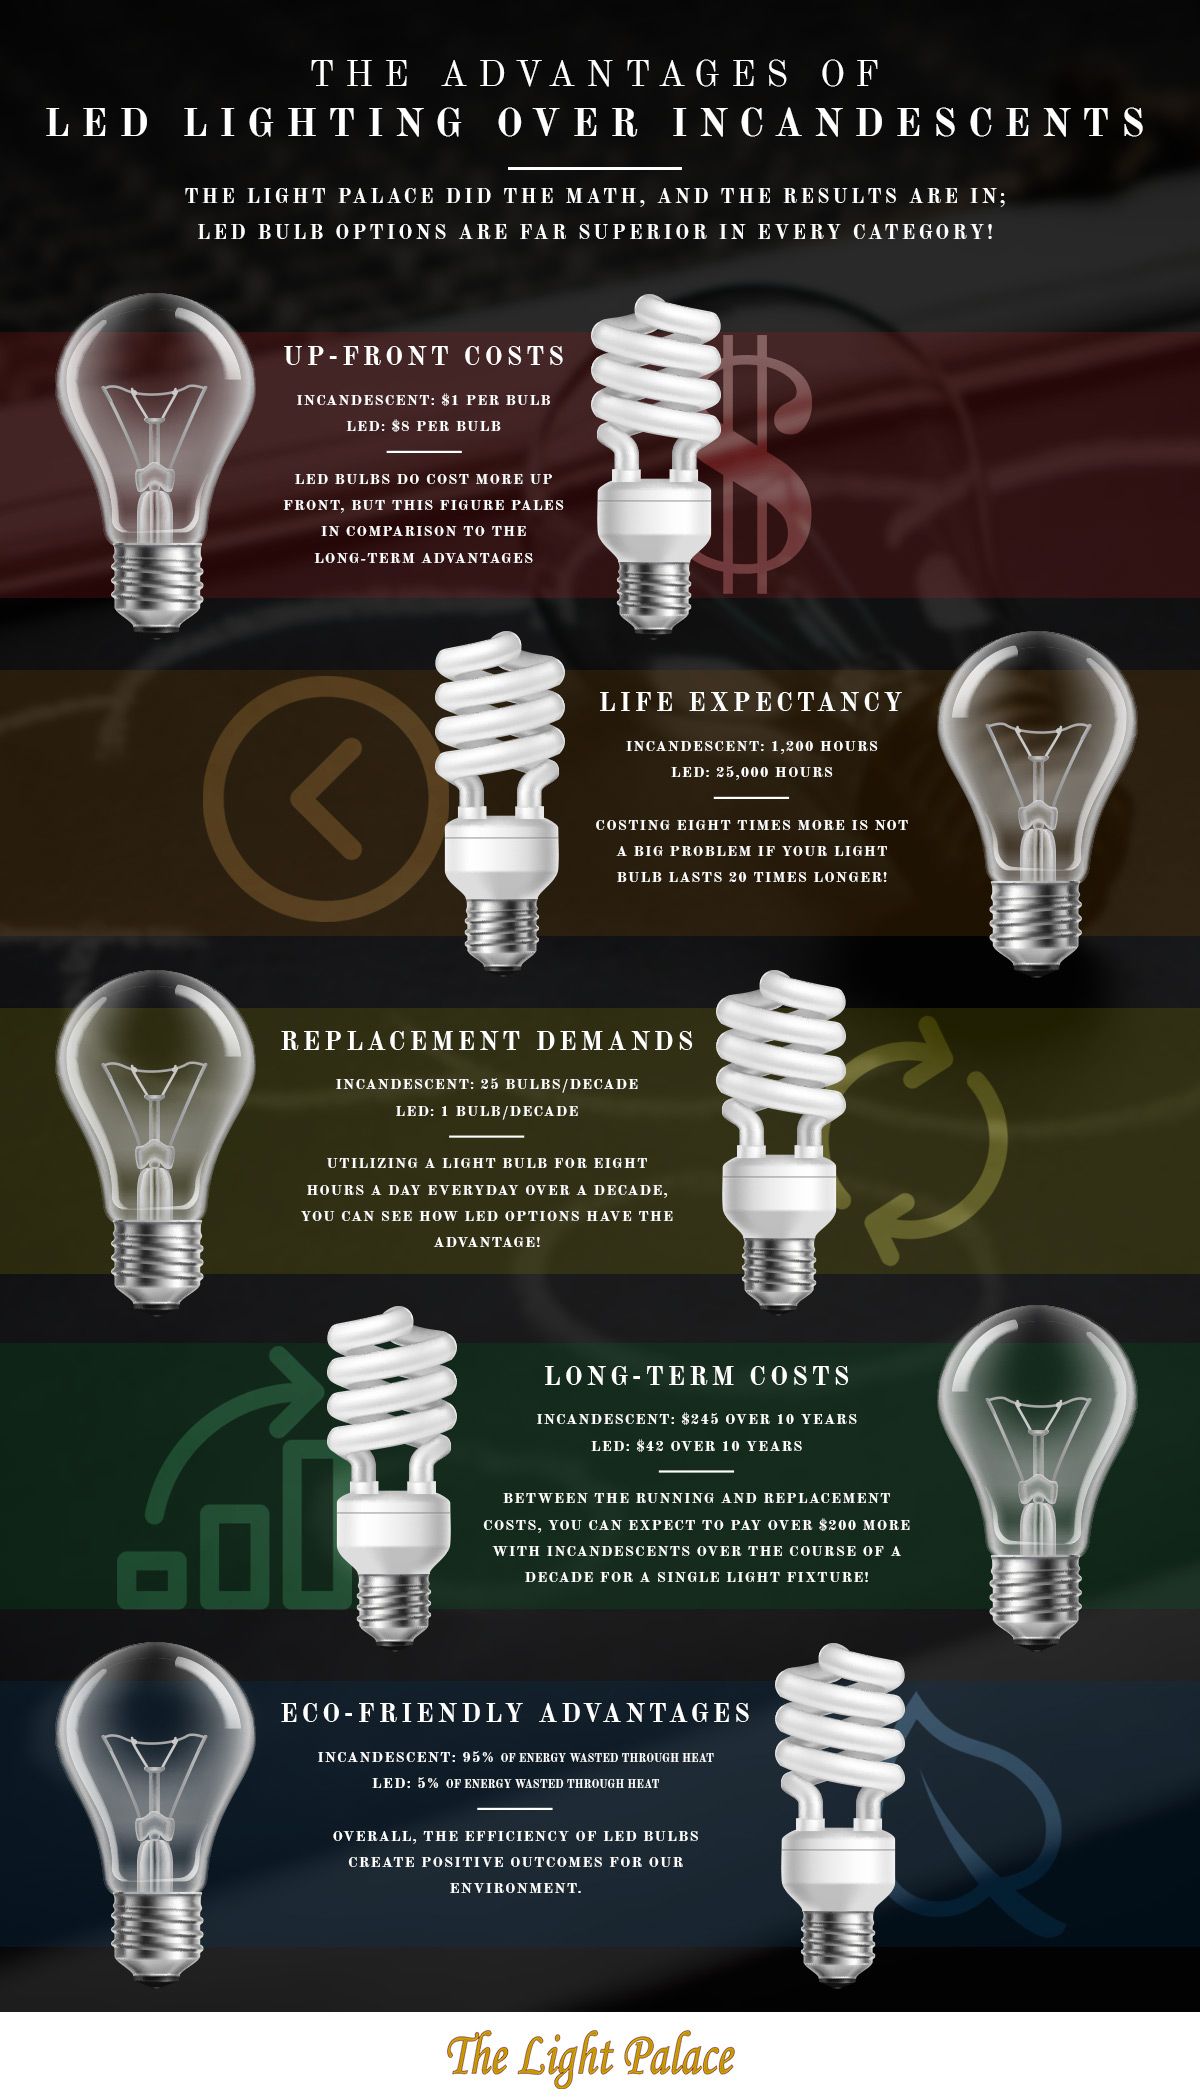 LightPalace-infographic-5b4e14badeaee.jpg